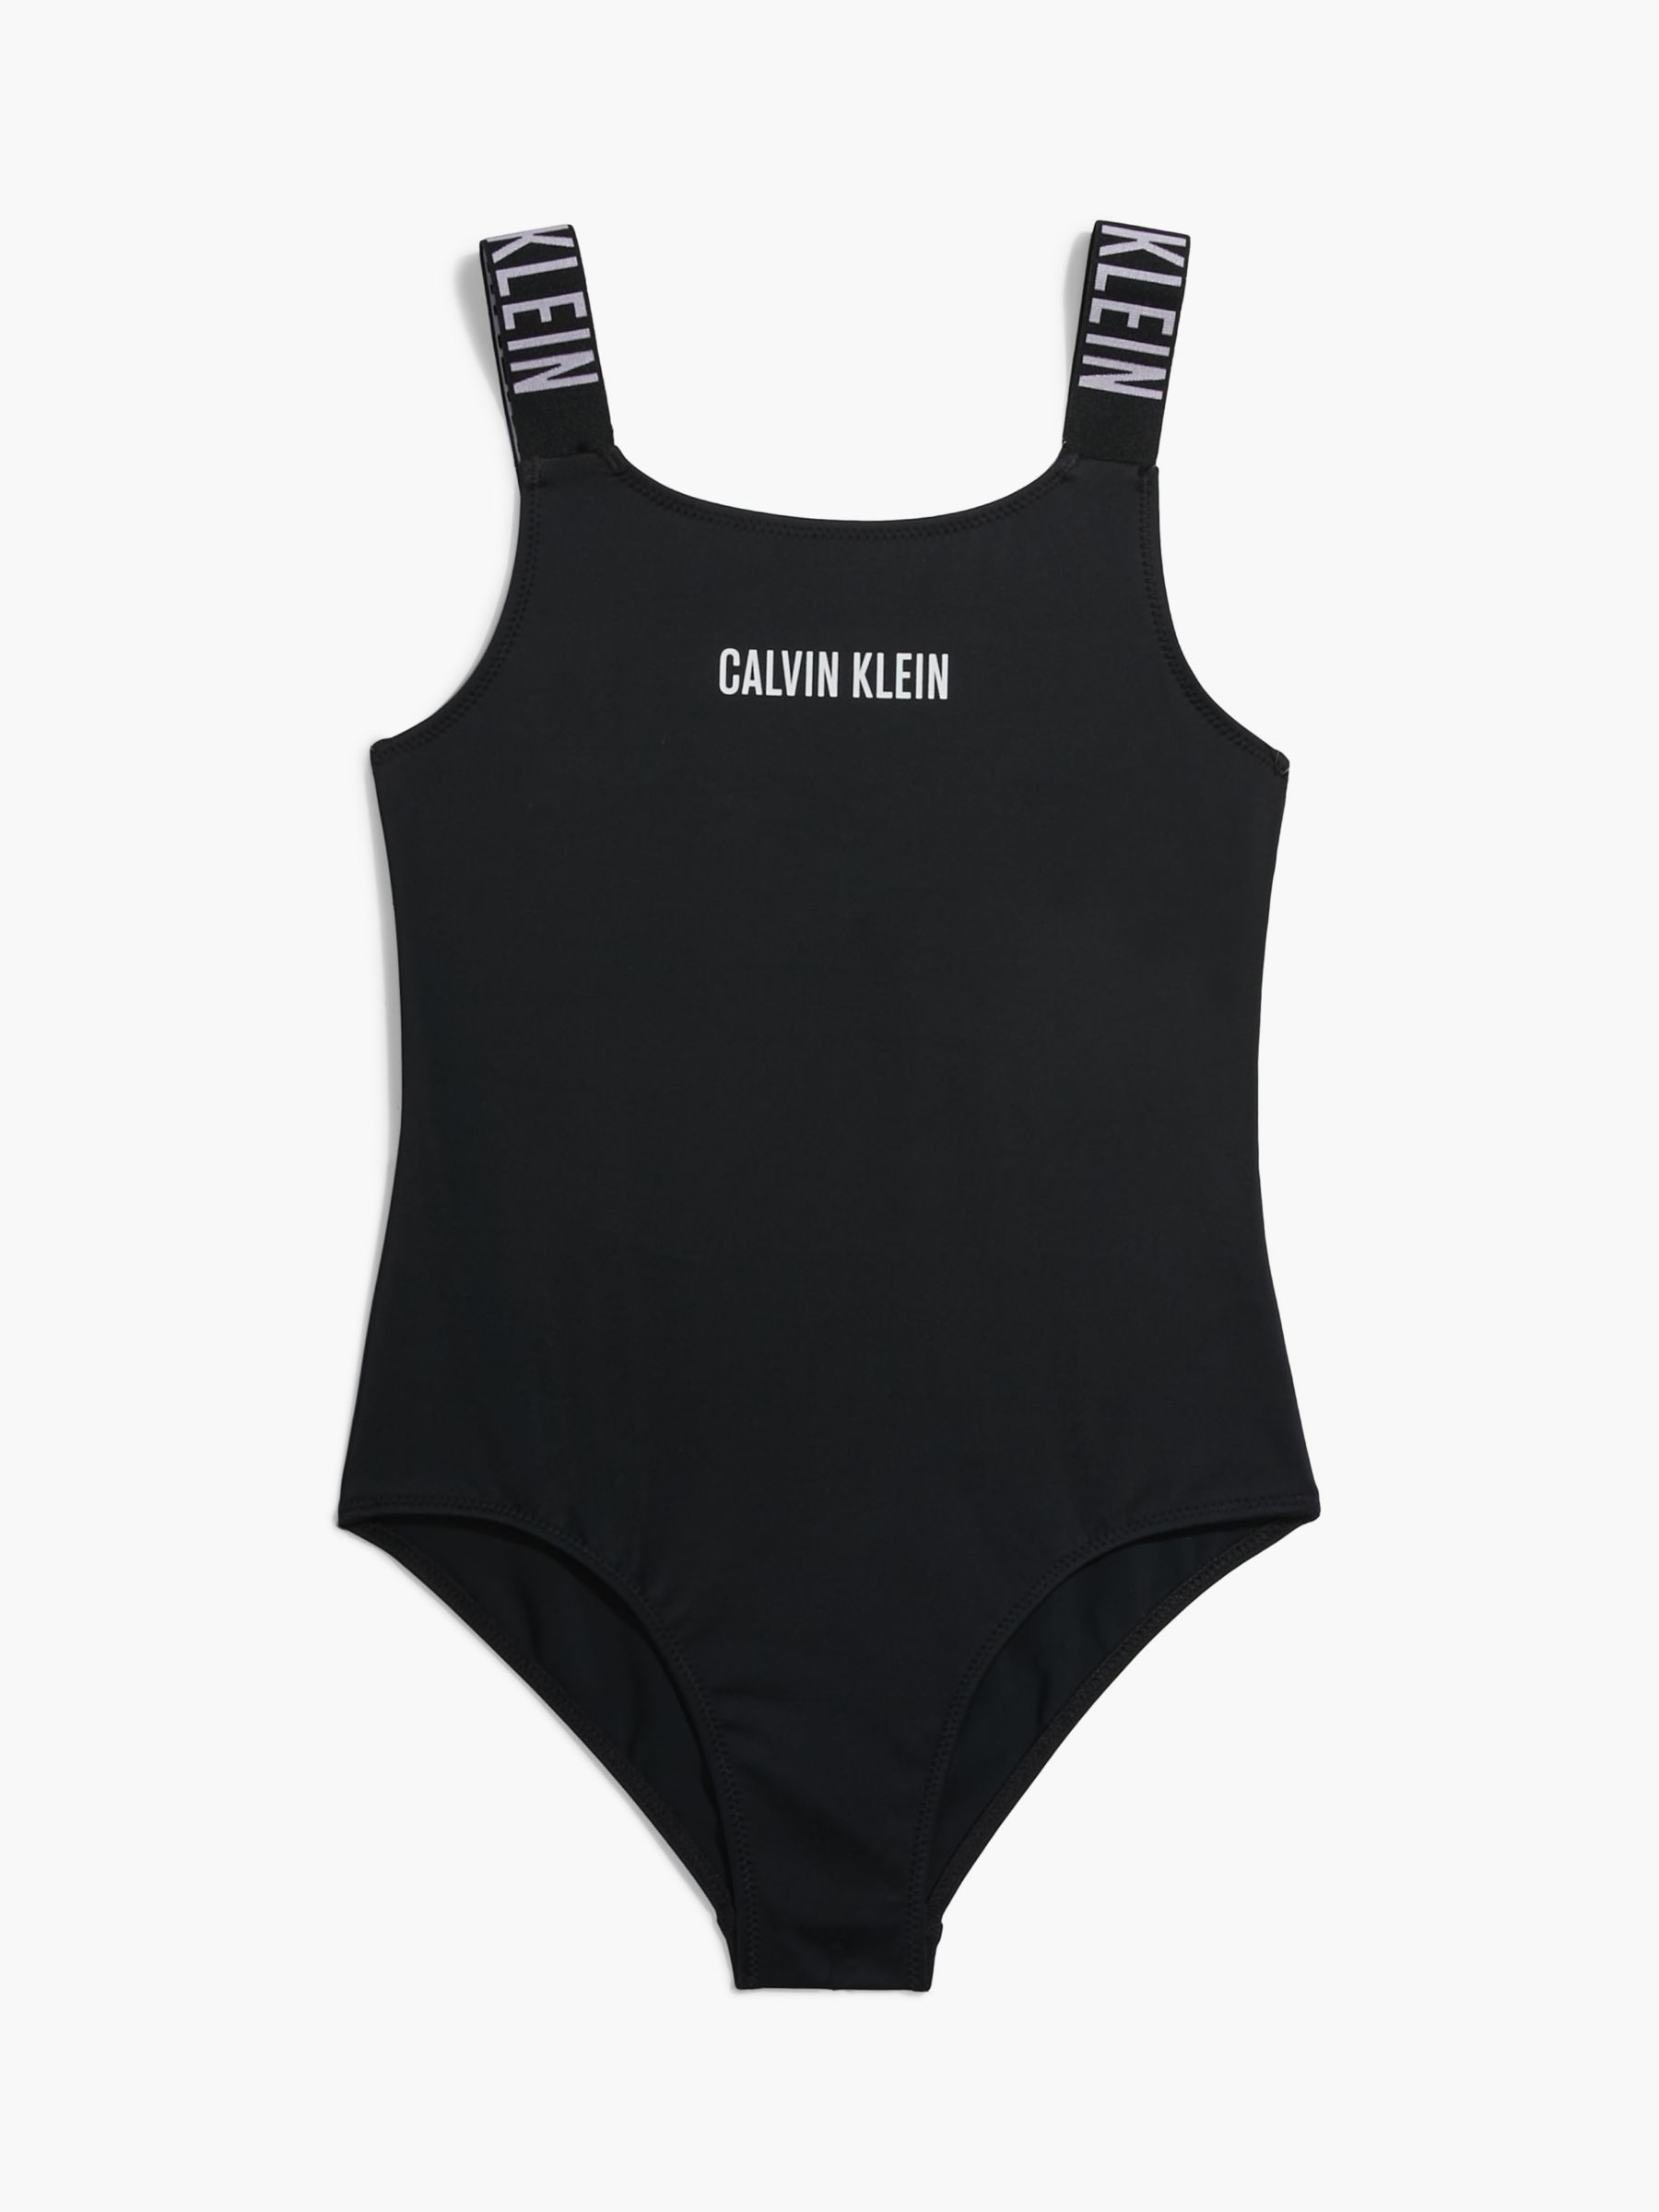 Calvin Klein Kids' Intense Power Logo Swimsuit, Black